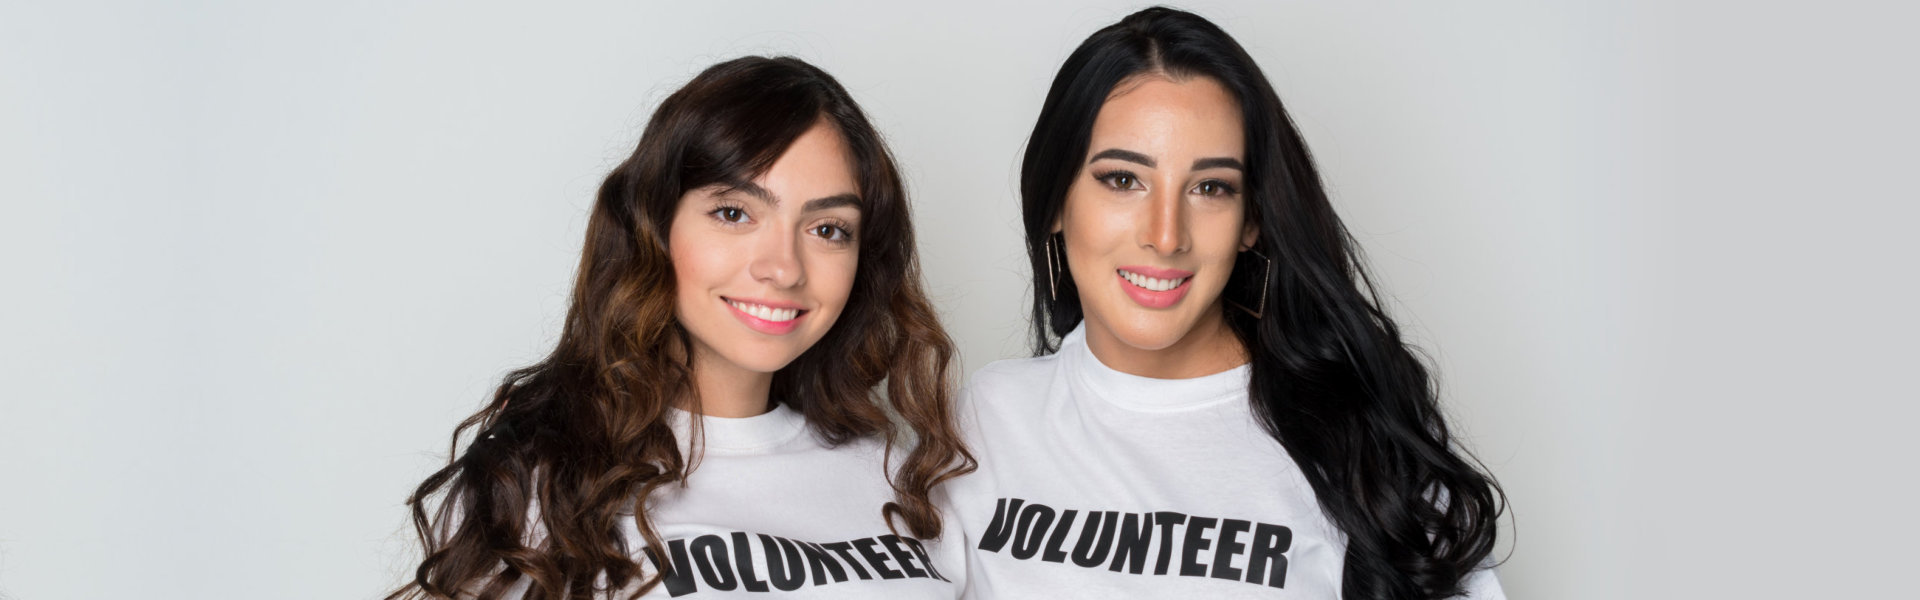 two volunteer smiling